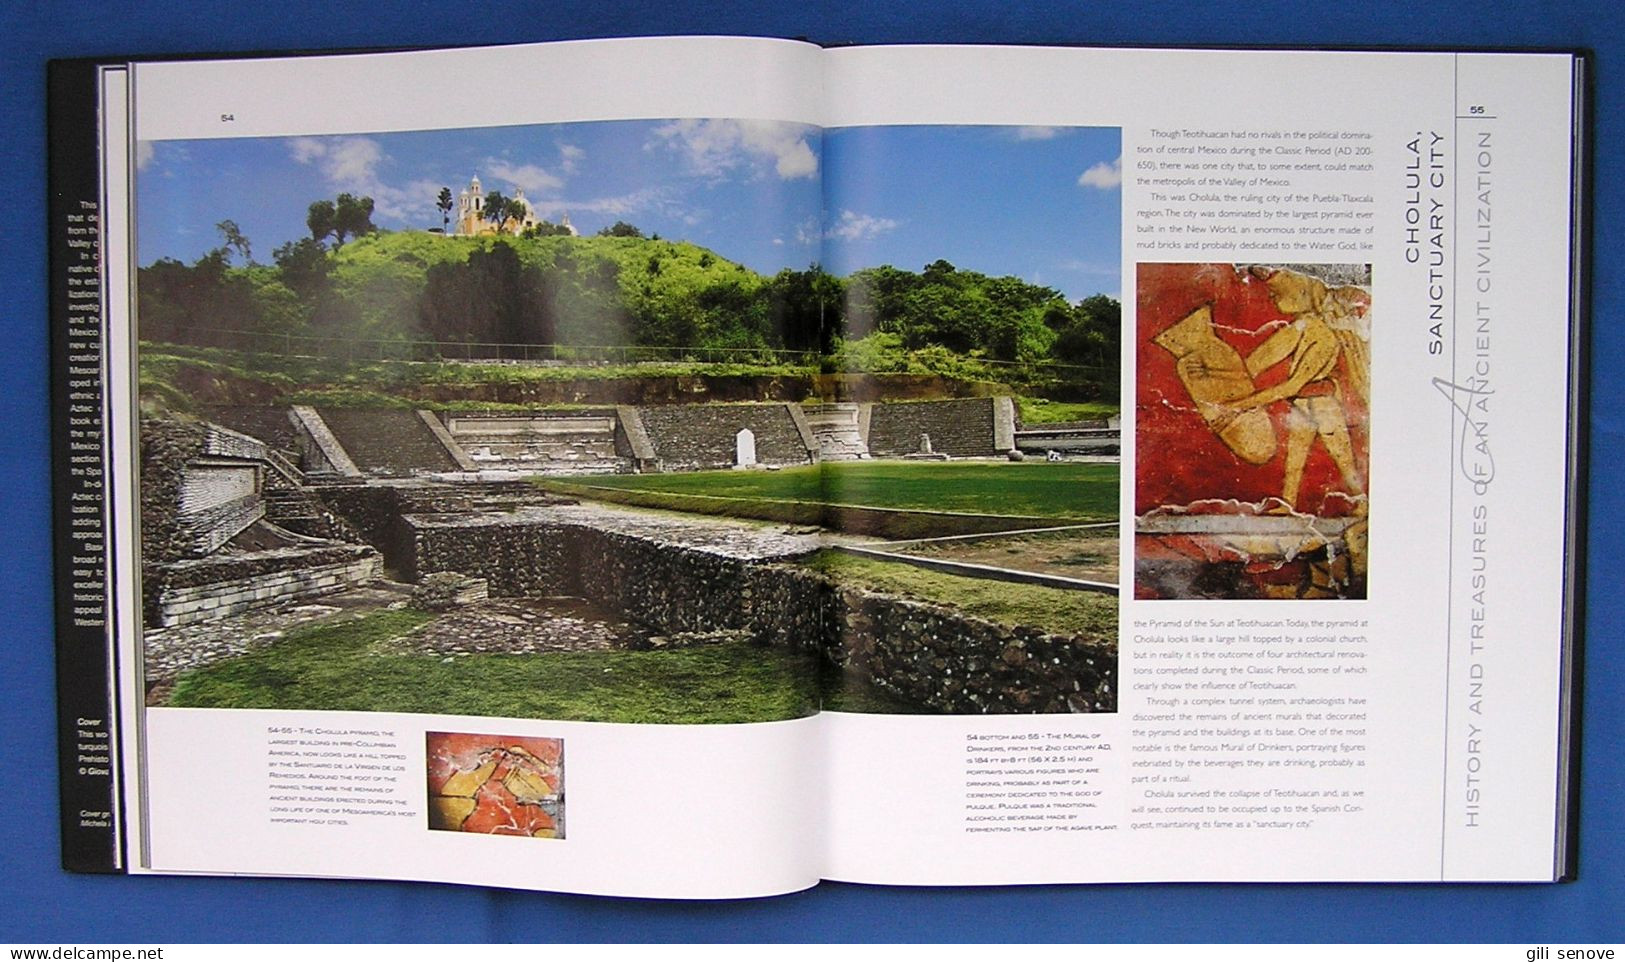 The Aztecs: History And Treasures Of An Ancient Civilization 2007 - Bellas Artes